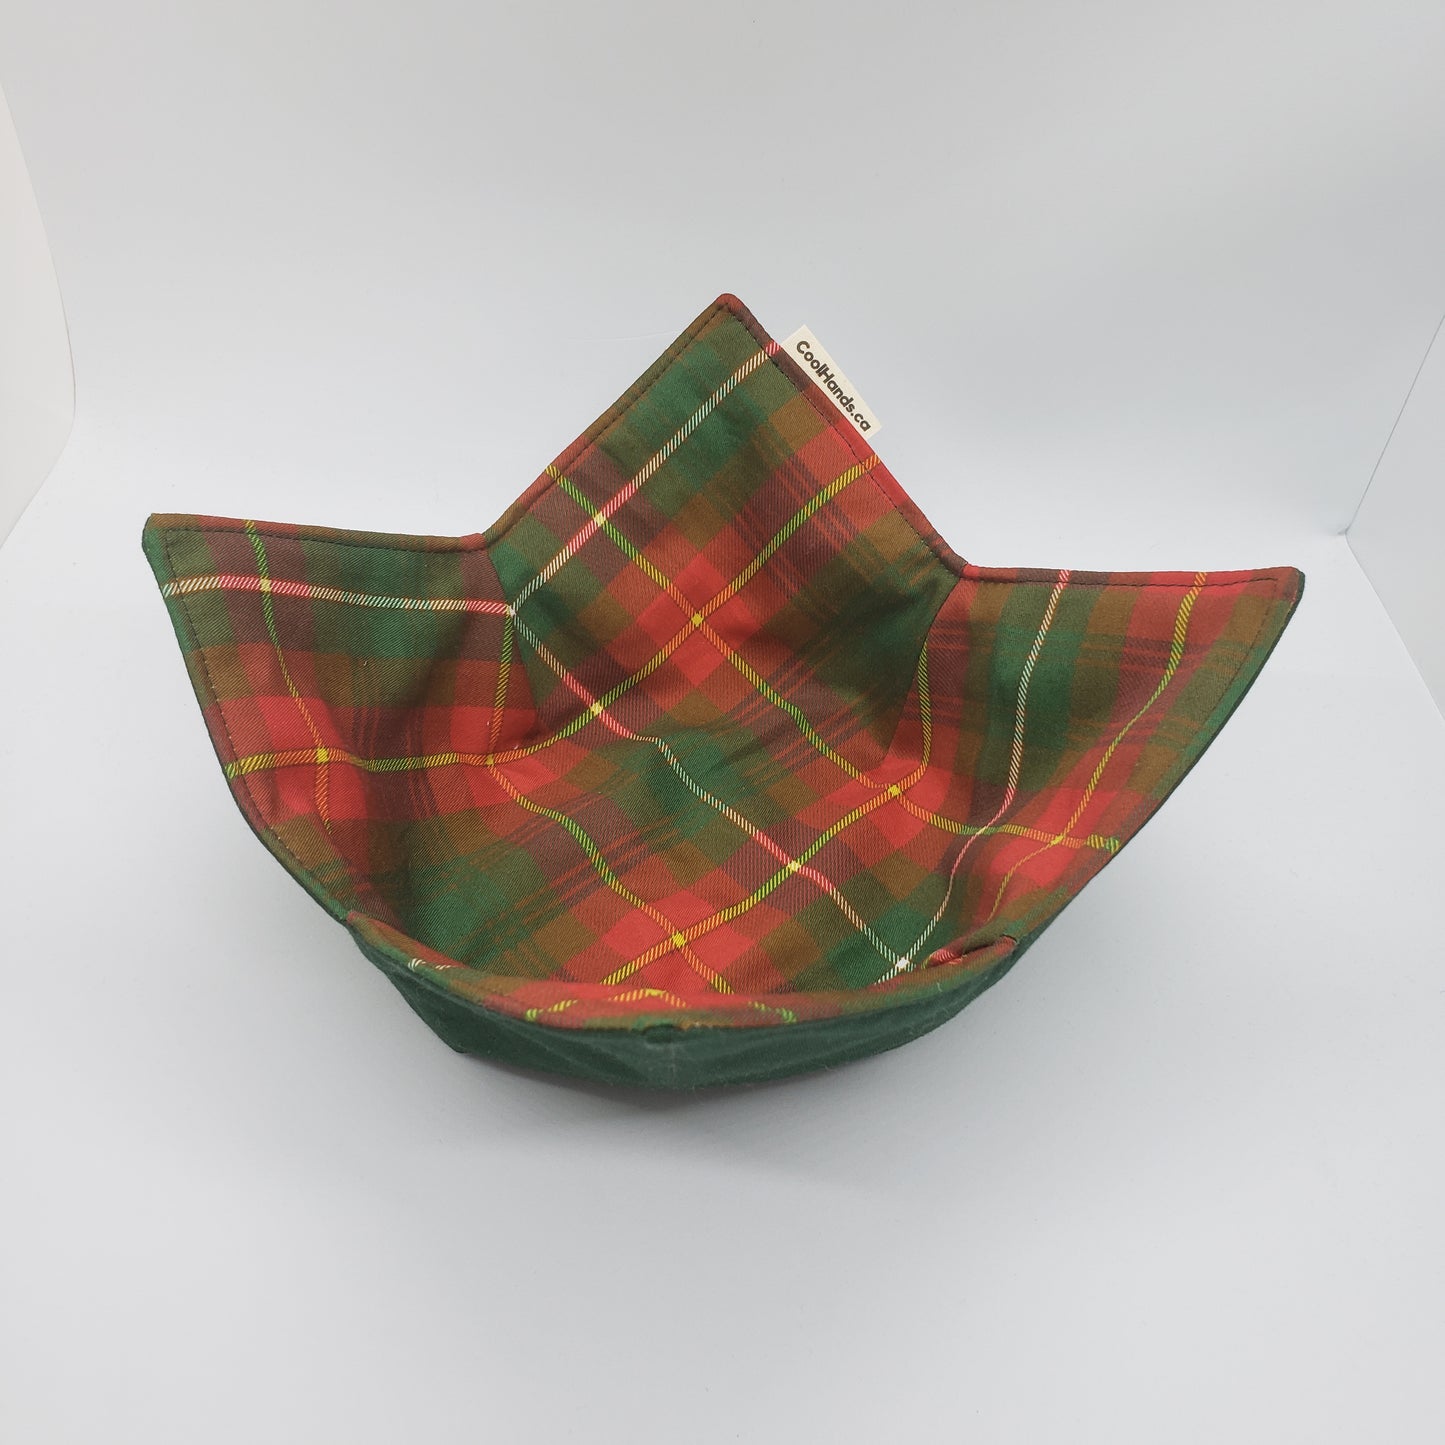 100% Cotton Microwavable Bowl Cozy - "Prince Edward Island"